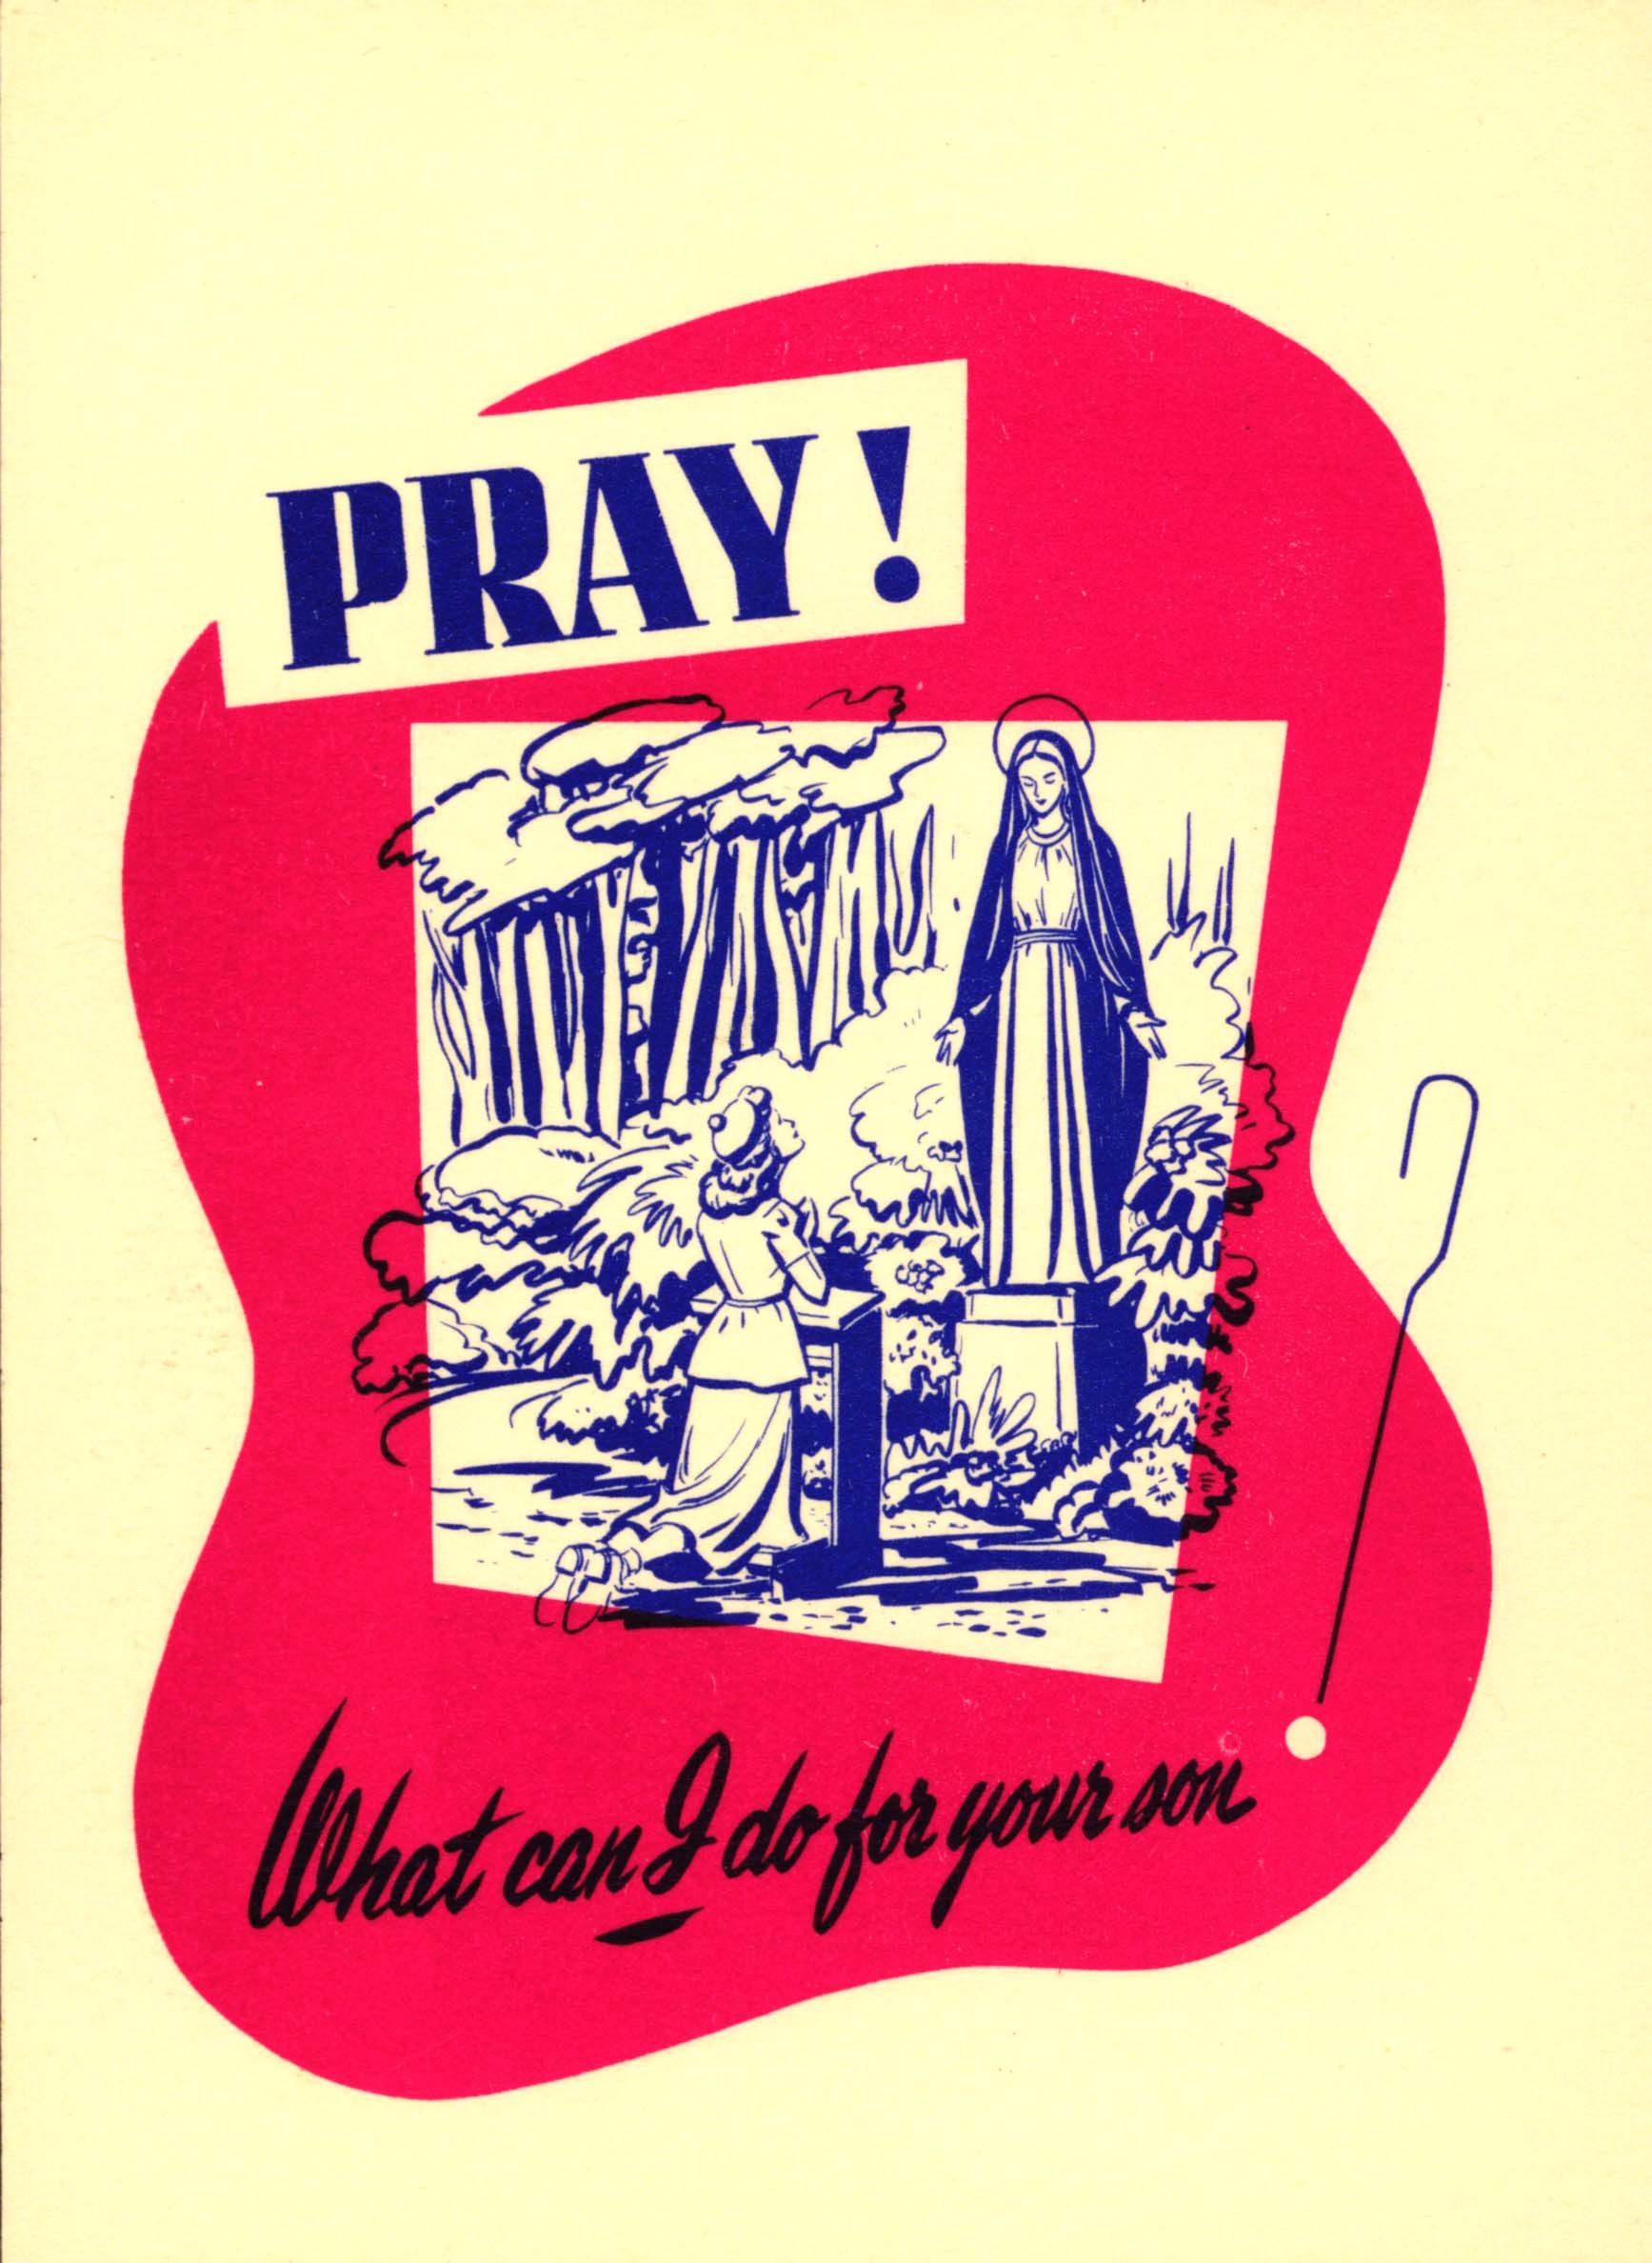 Fatima holy card. Fatima, c. 1950